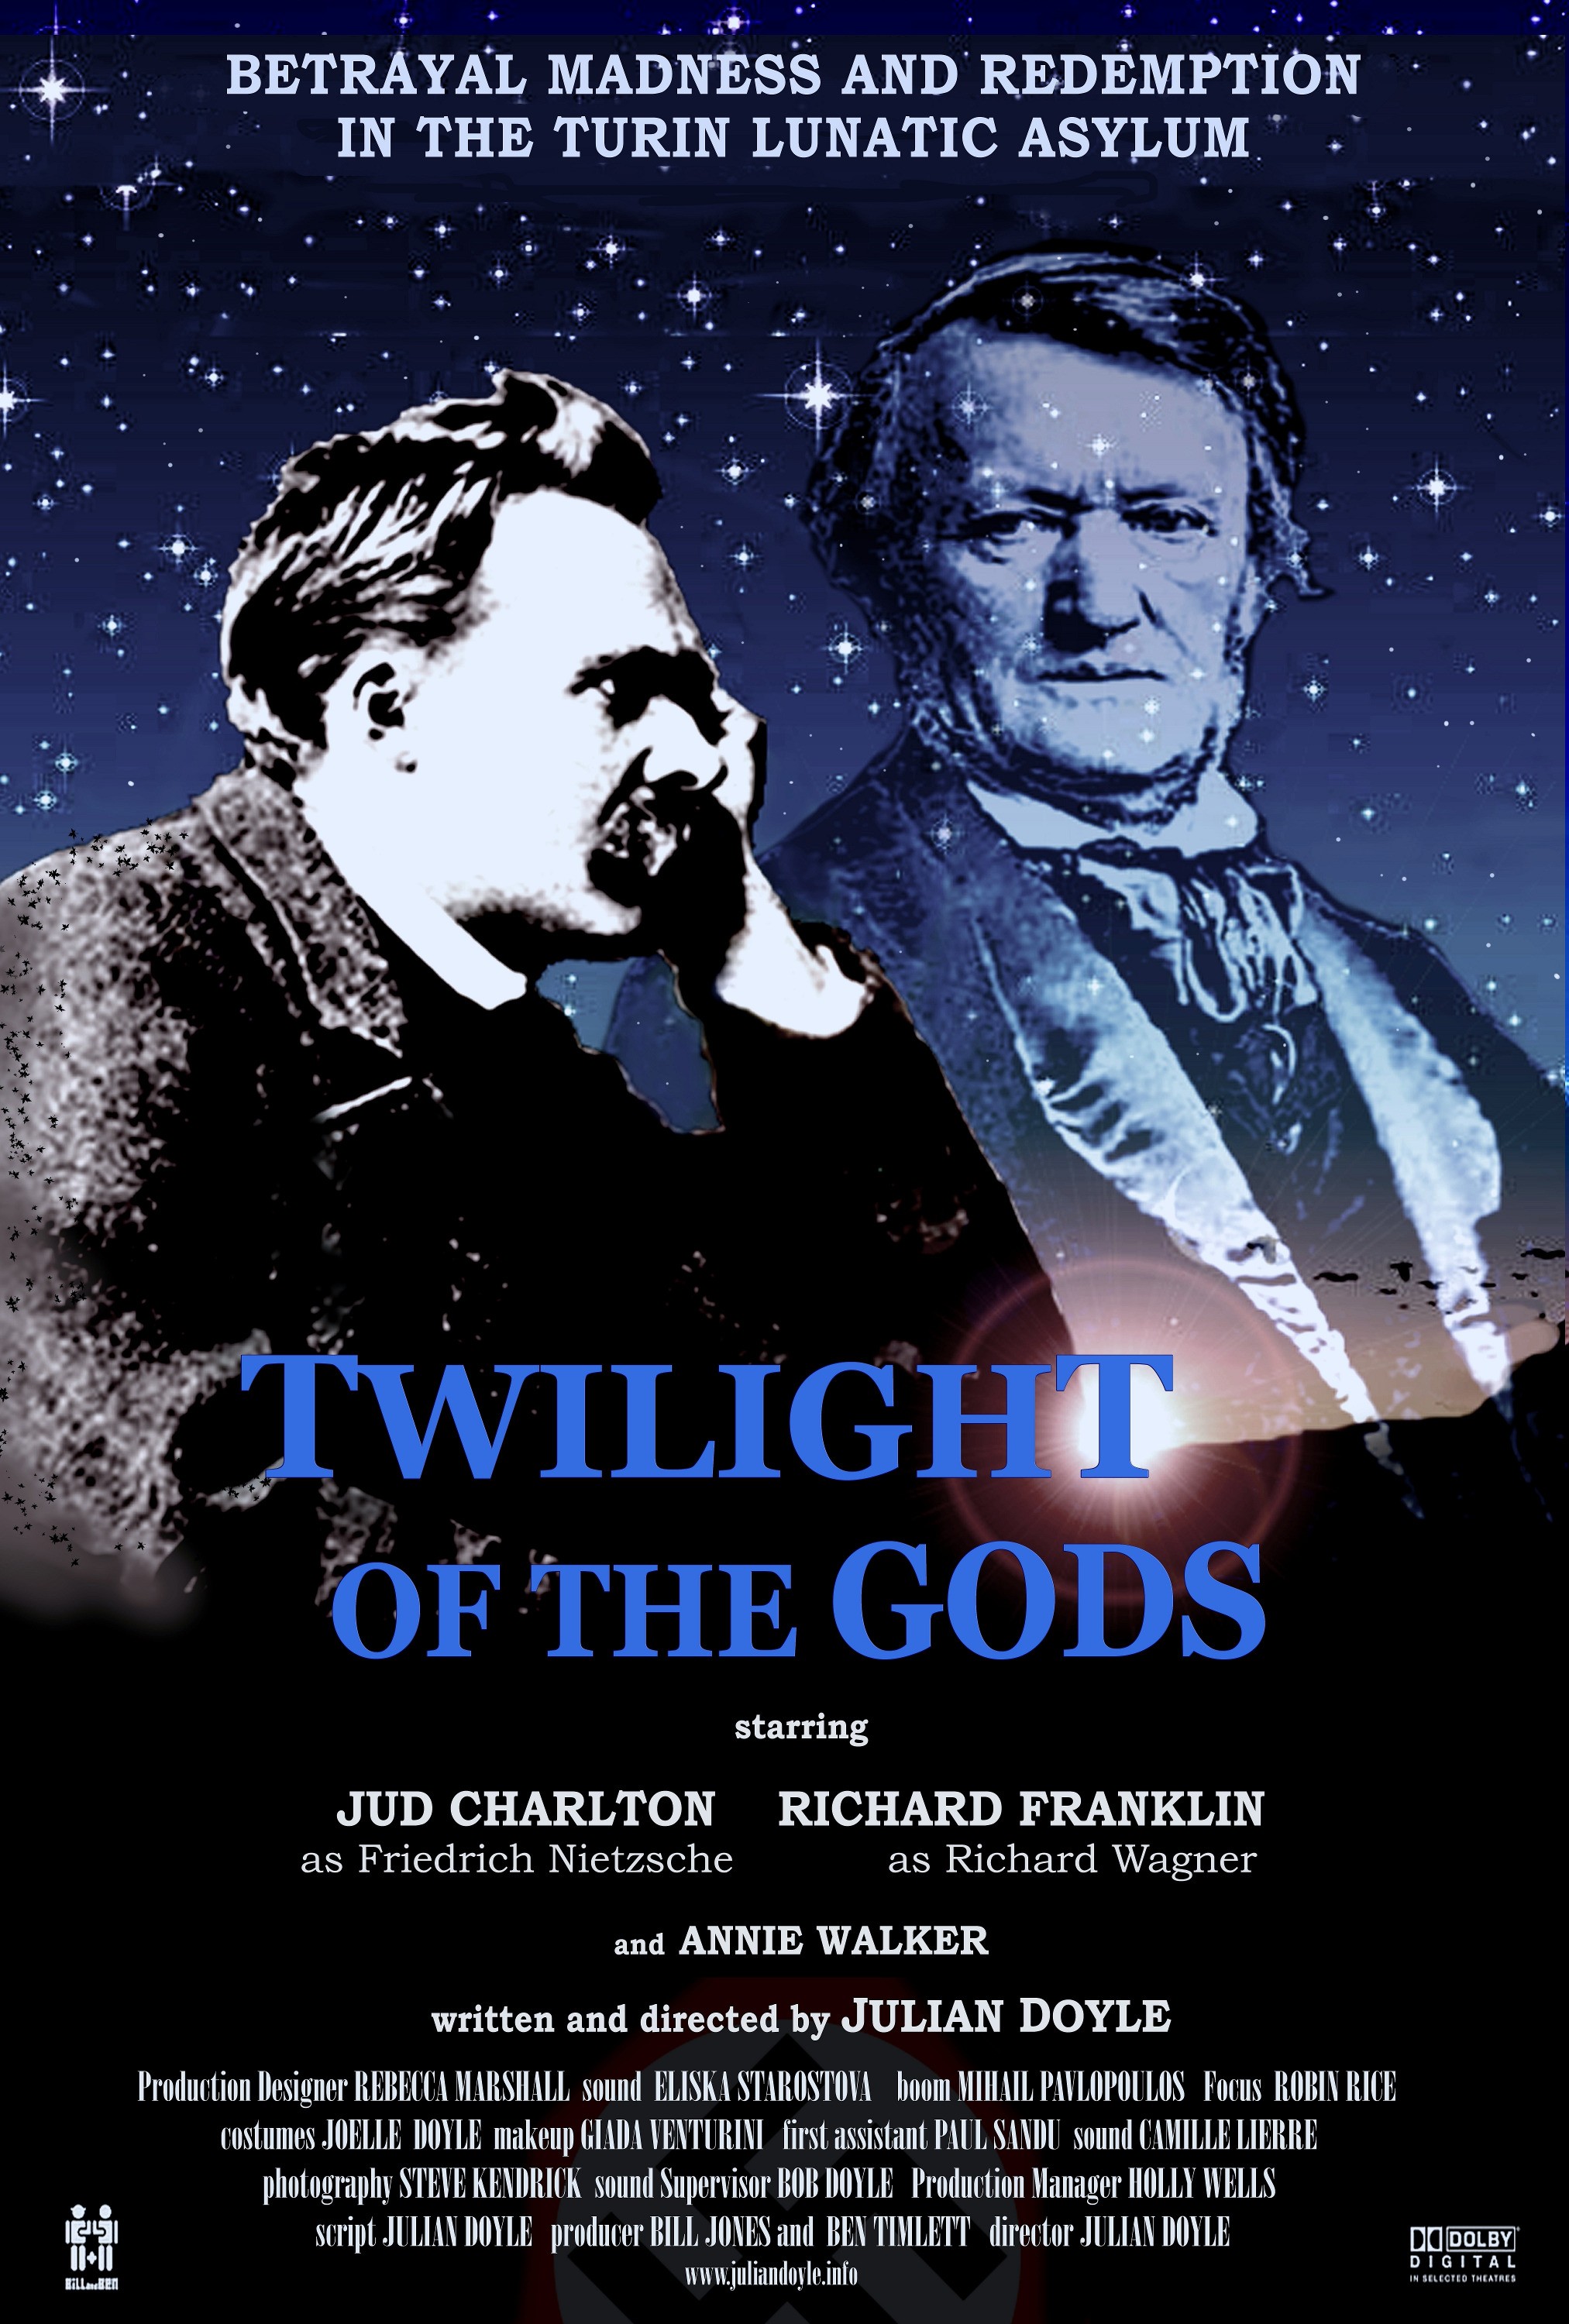 Mega Sized Movie Poster Image for Twilight of the Gods 